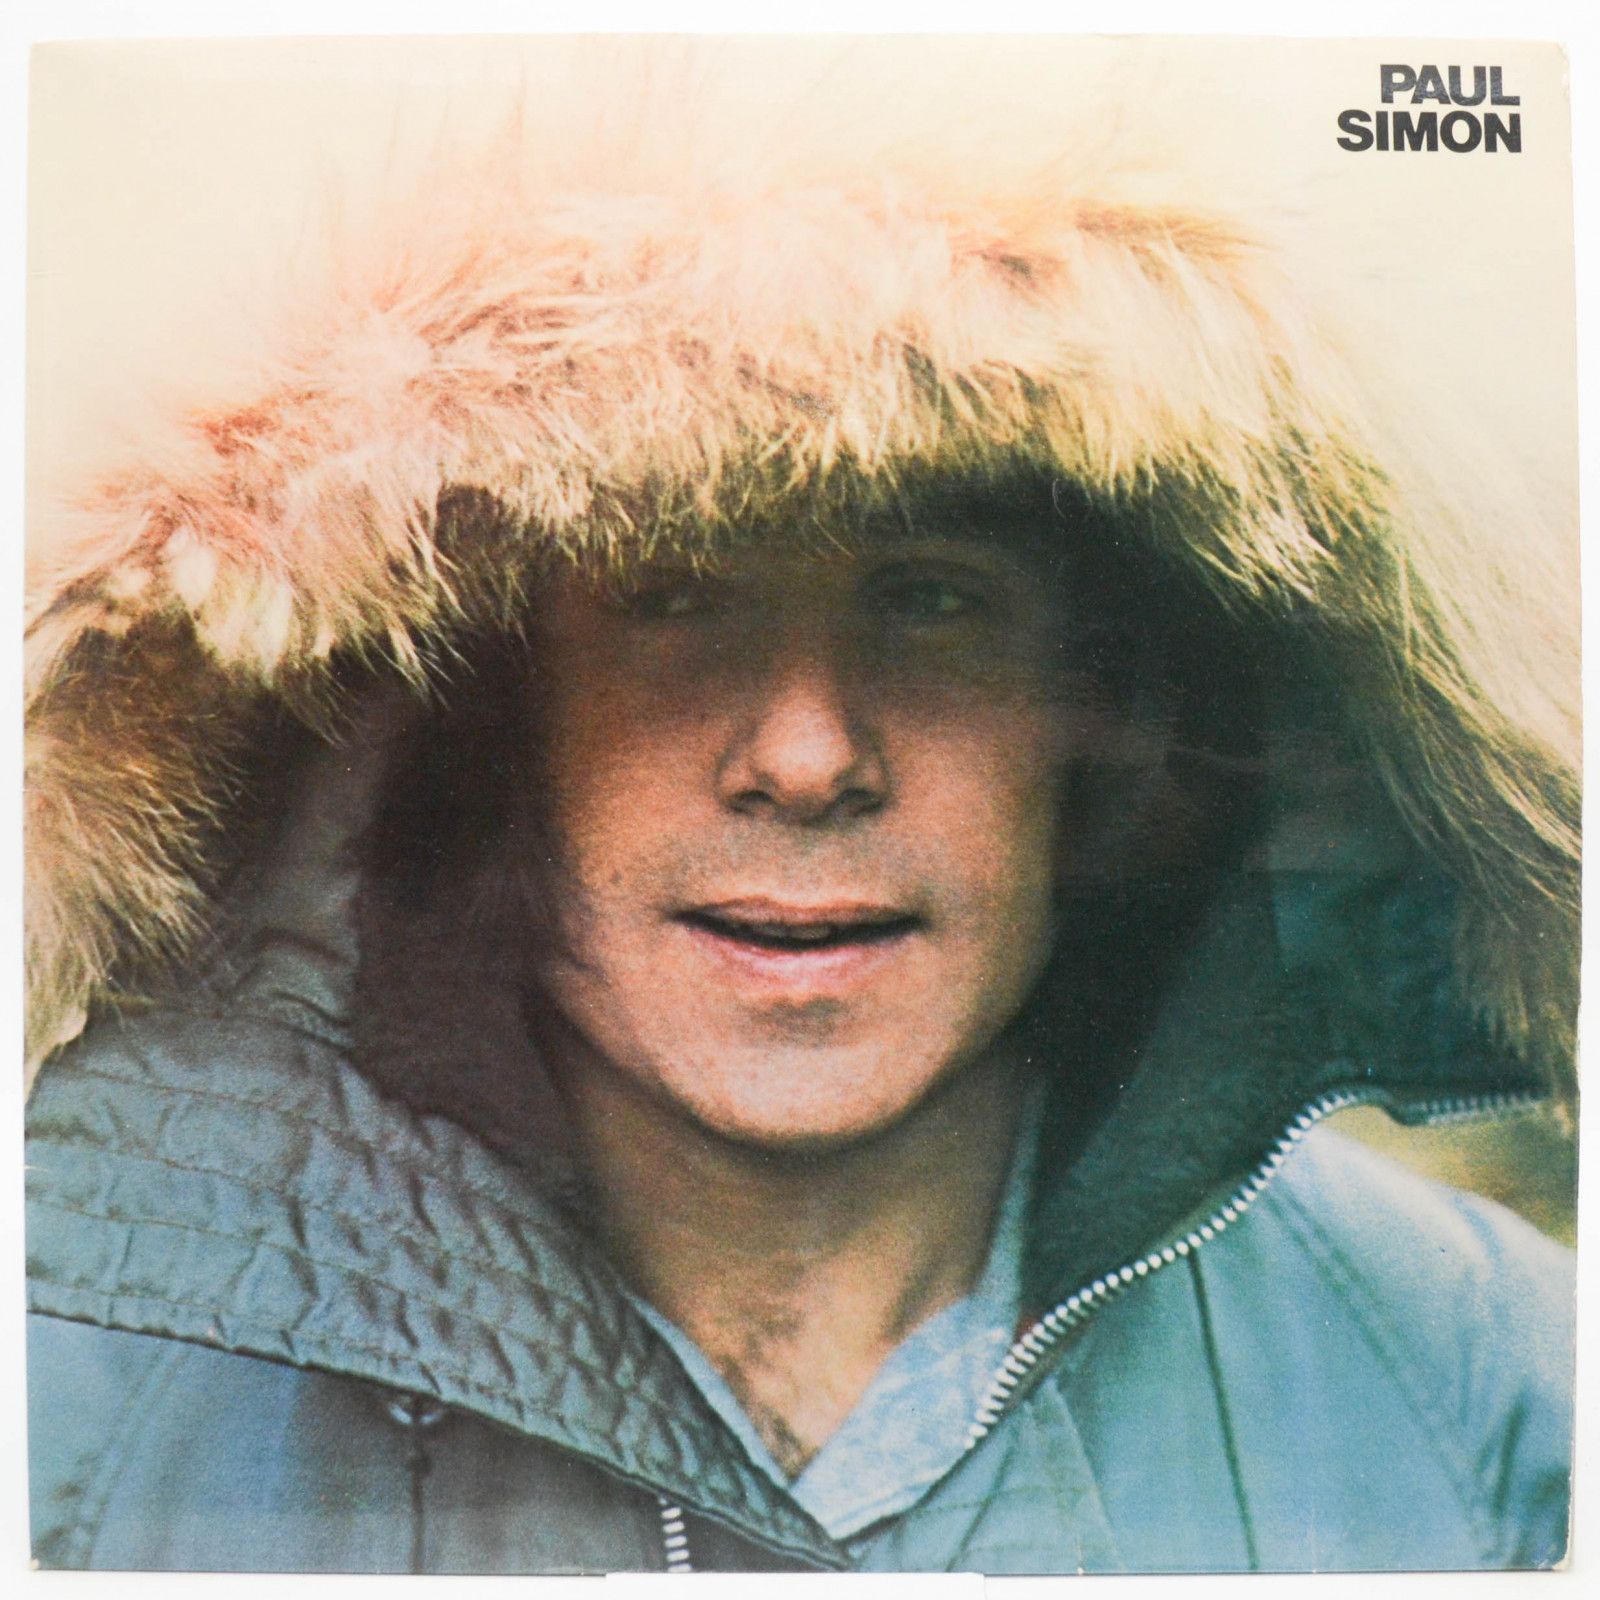 Paul Simon — Paul Simon, 1971